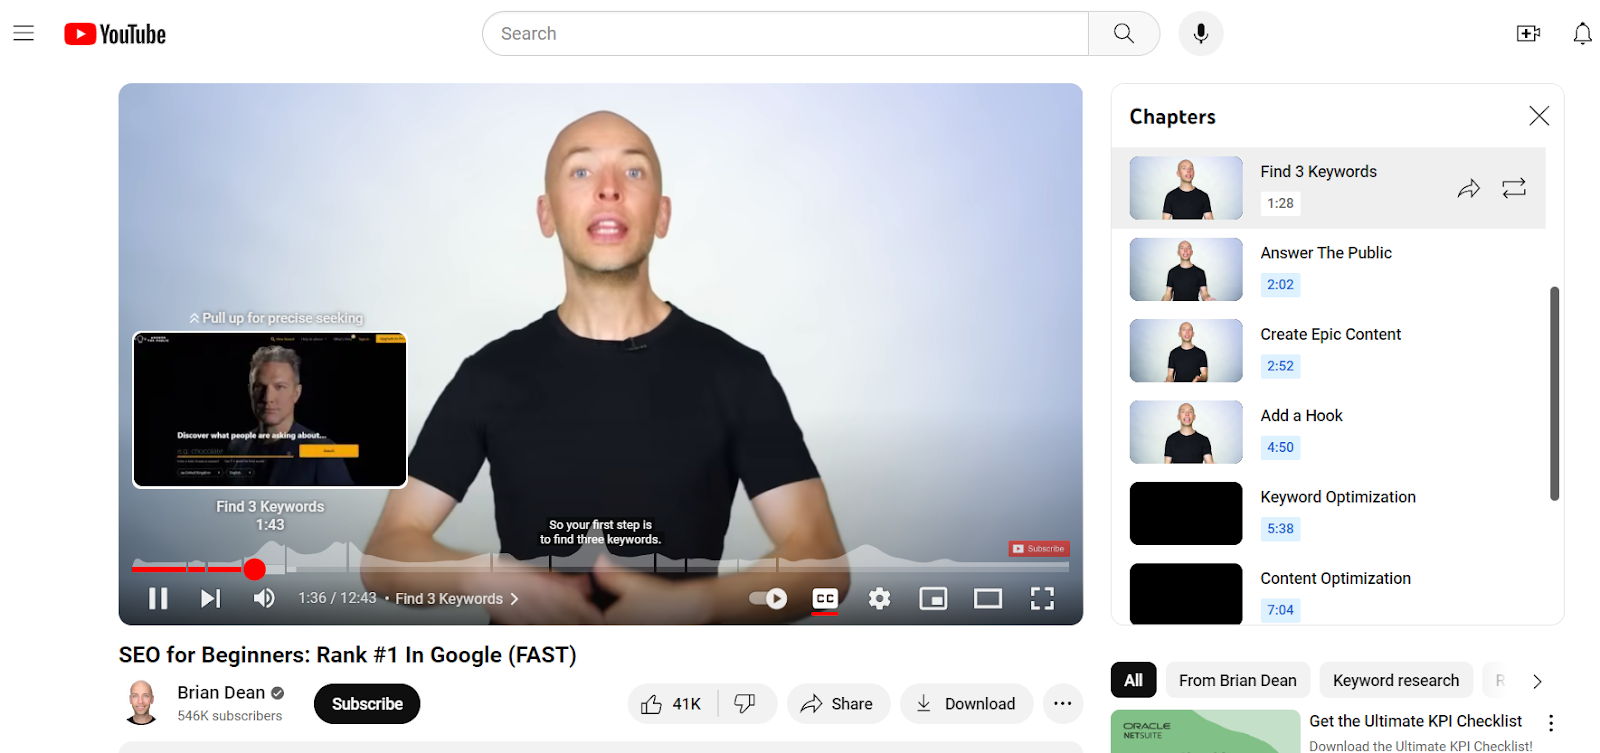 Screenshot of Brian Dean's YouTube video "SEO for Beginners: Rank #1 In Google (FAST)"